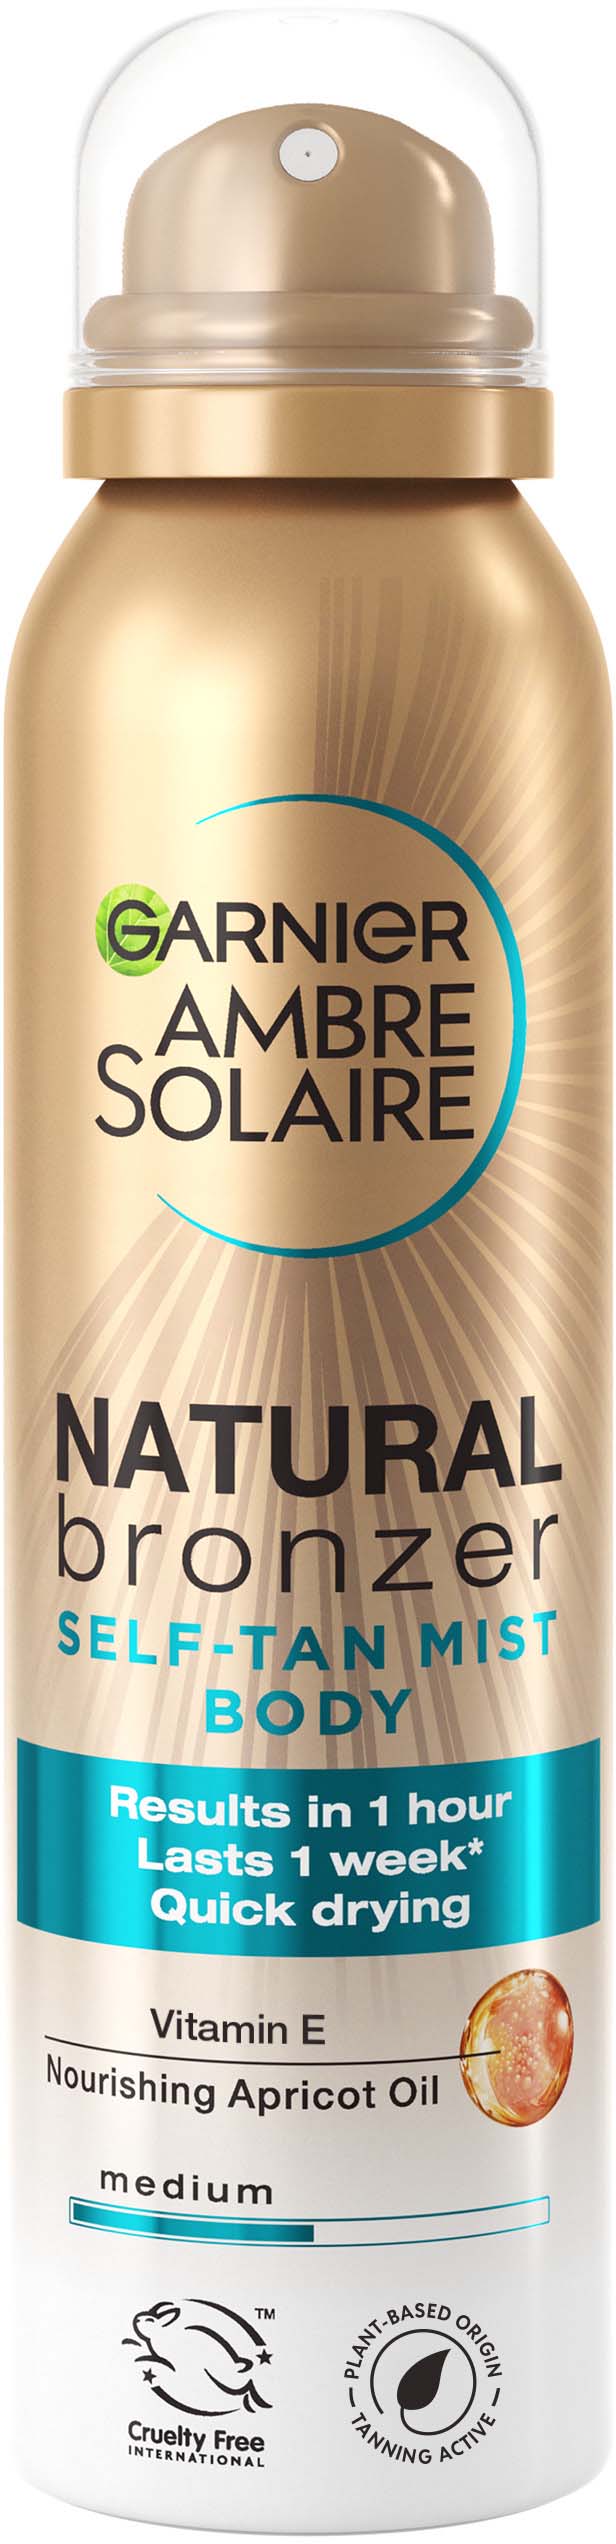 Garnier Ambre Solaire Natural Mist ml Body Bronzer Tan Self 150